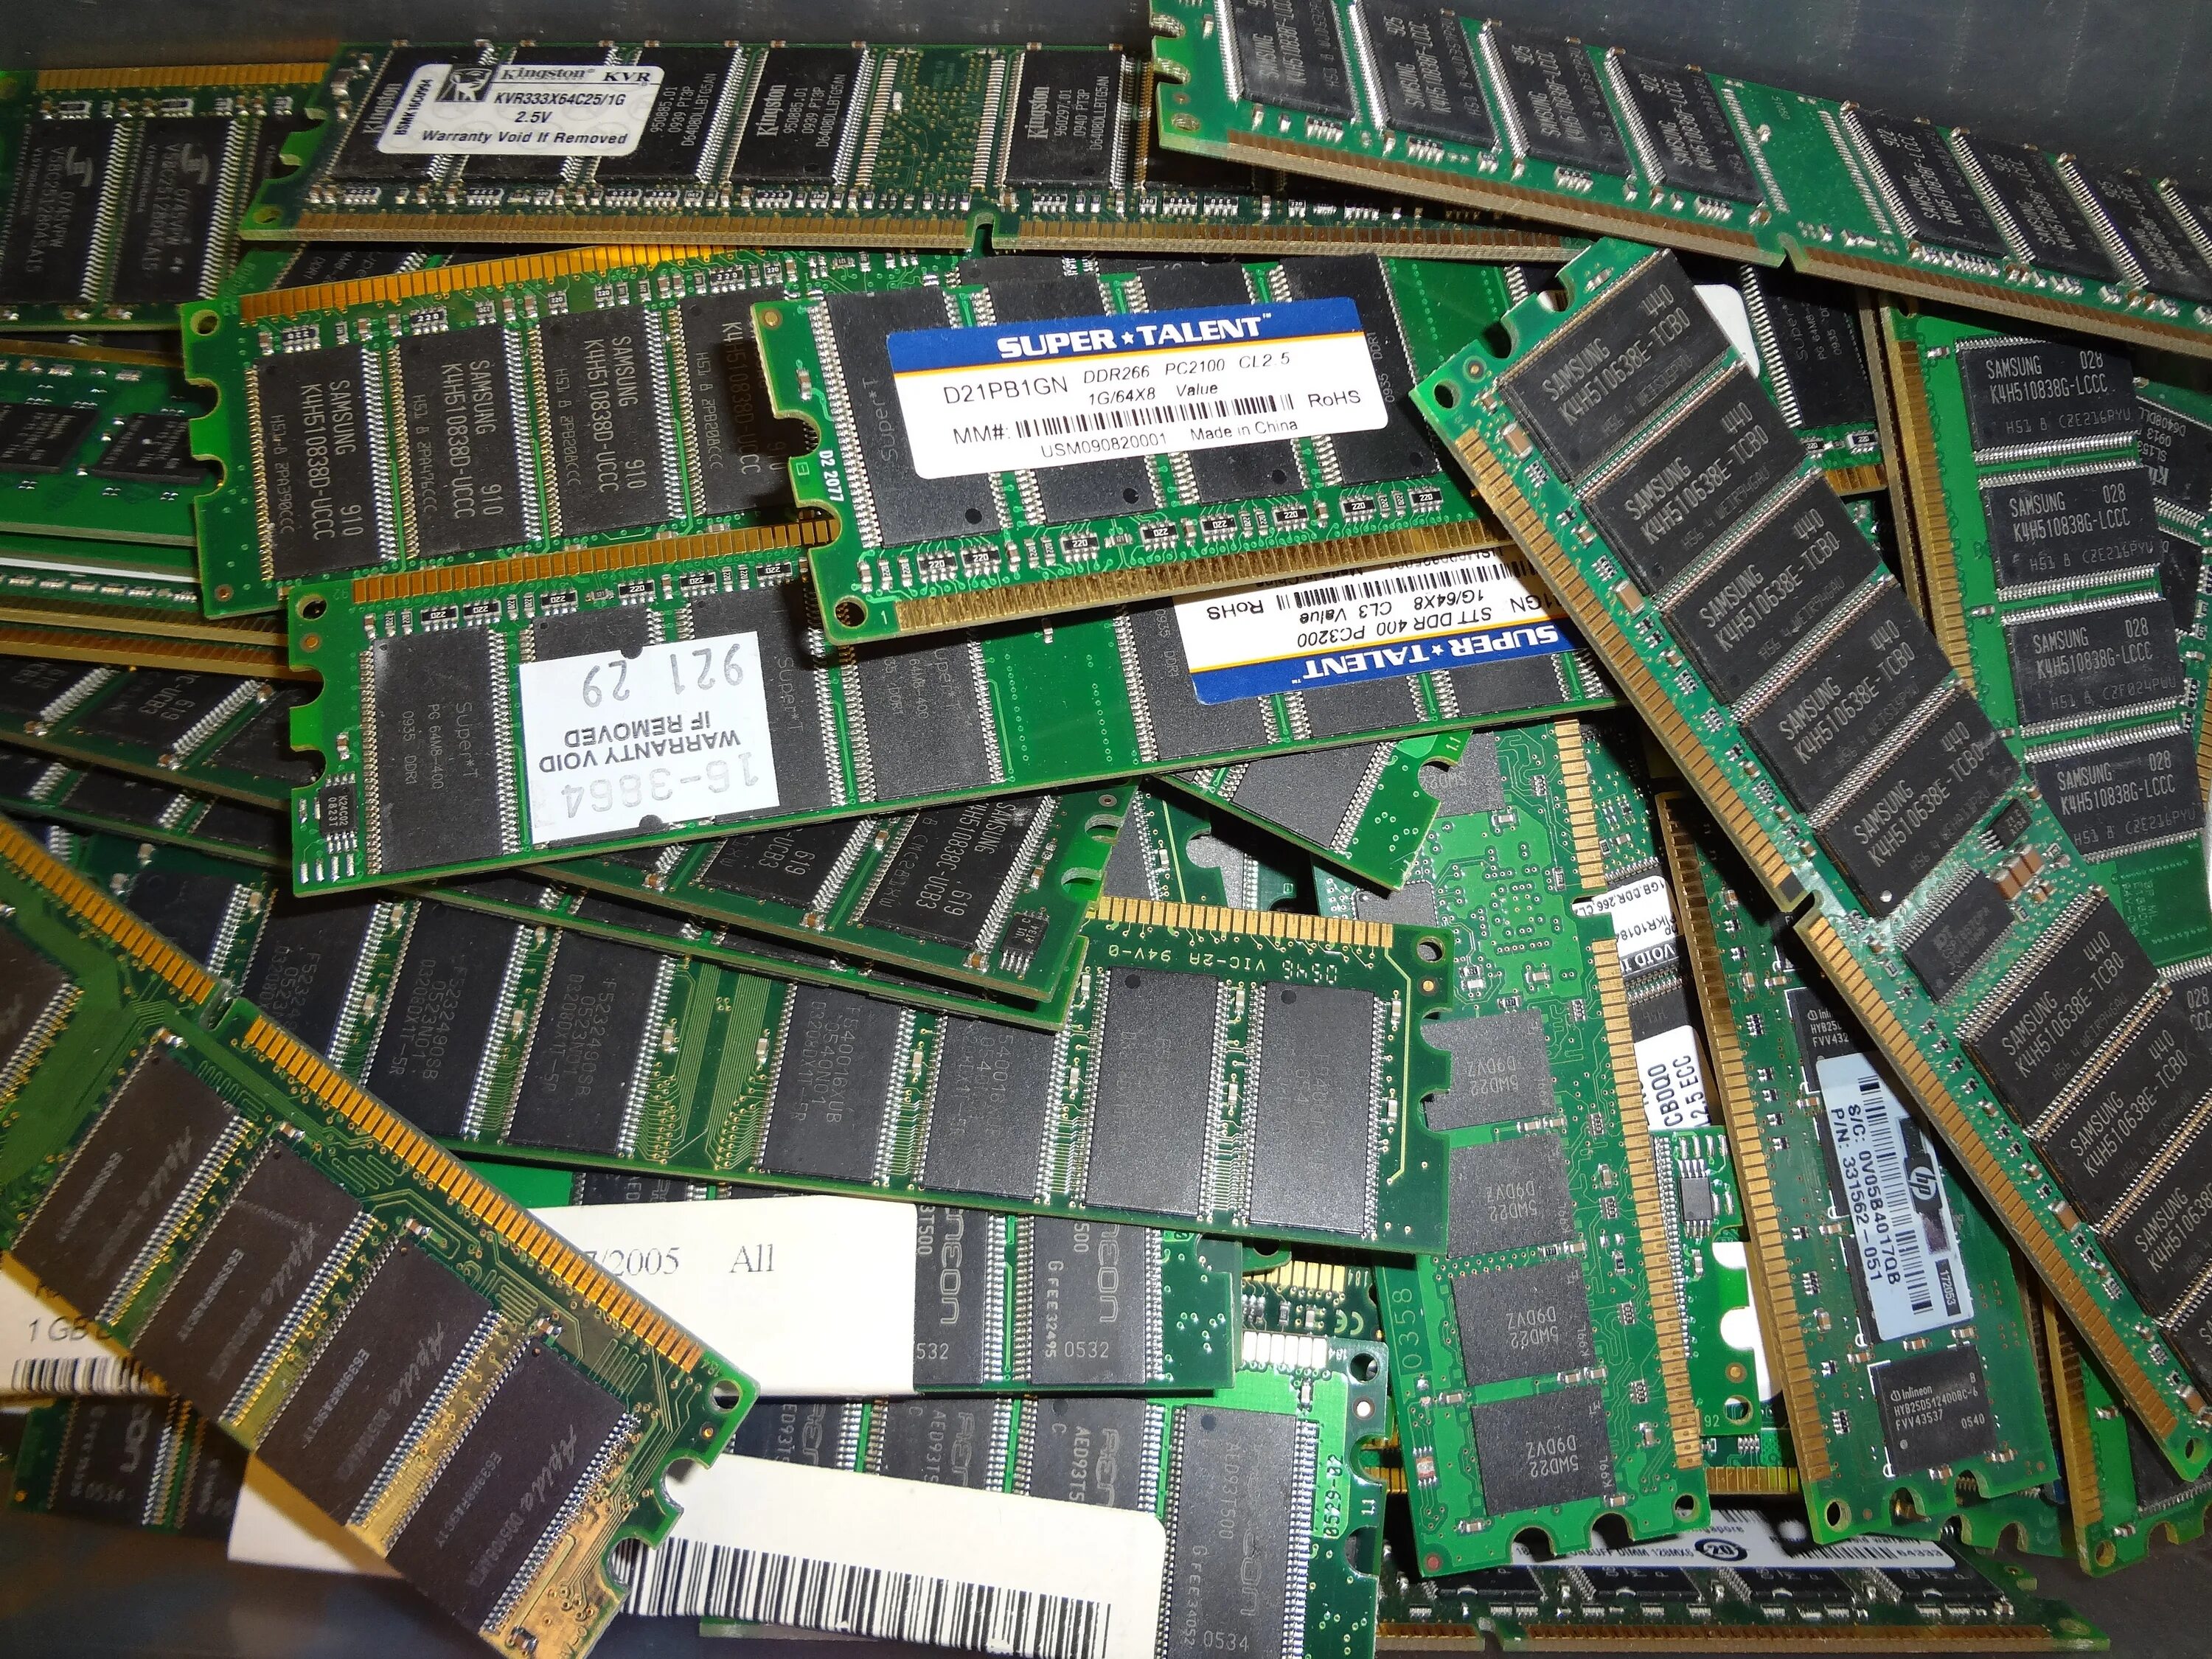 System ram. Оперативная память (Ram). Ddr3 16 чипов для ноутбука. Оперативная память ддр5 игровая. Оперативная память Dram.